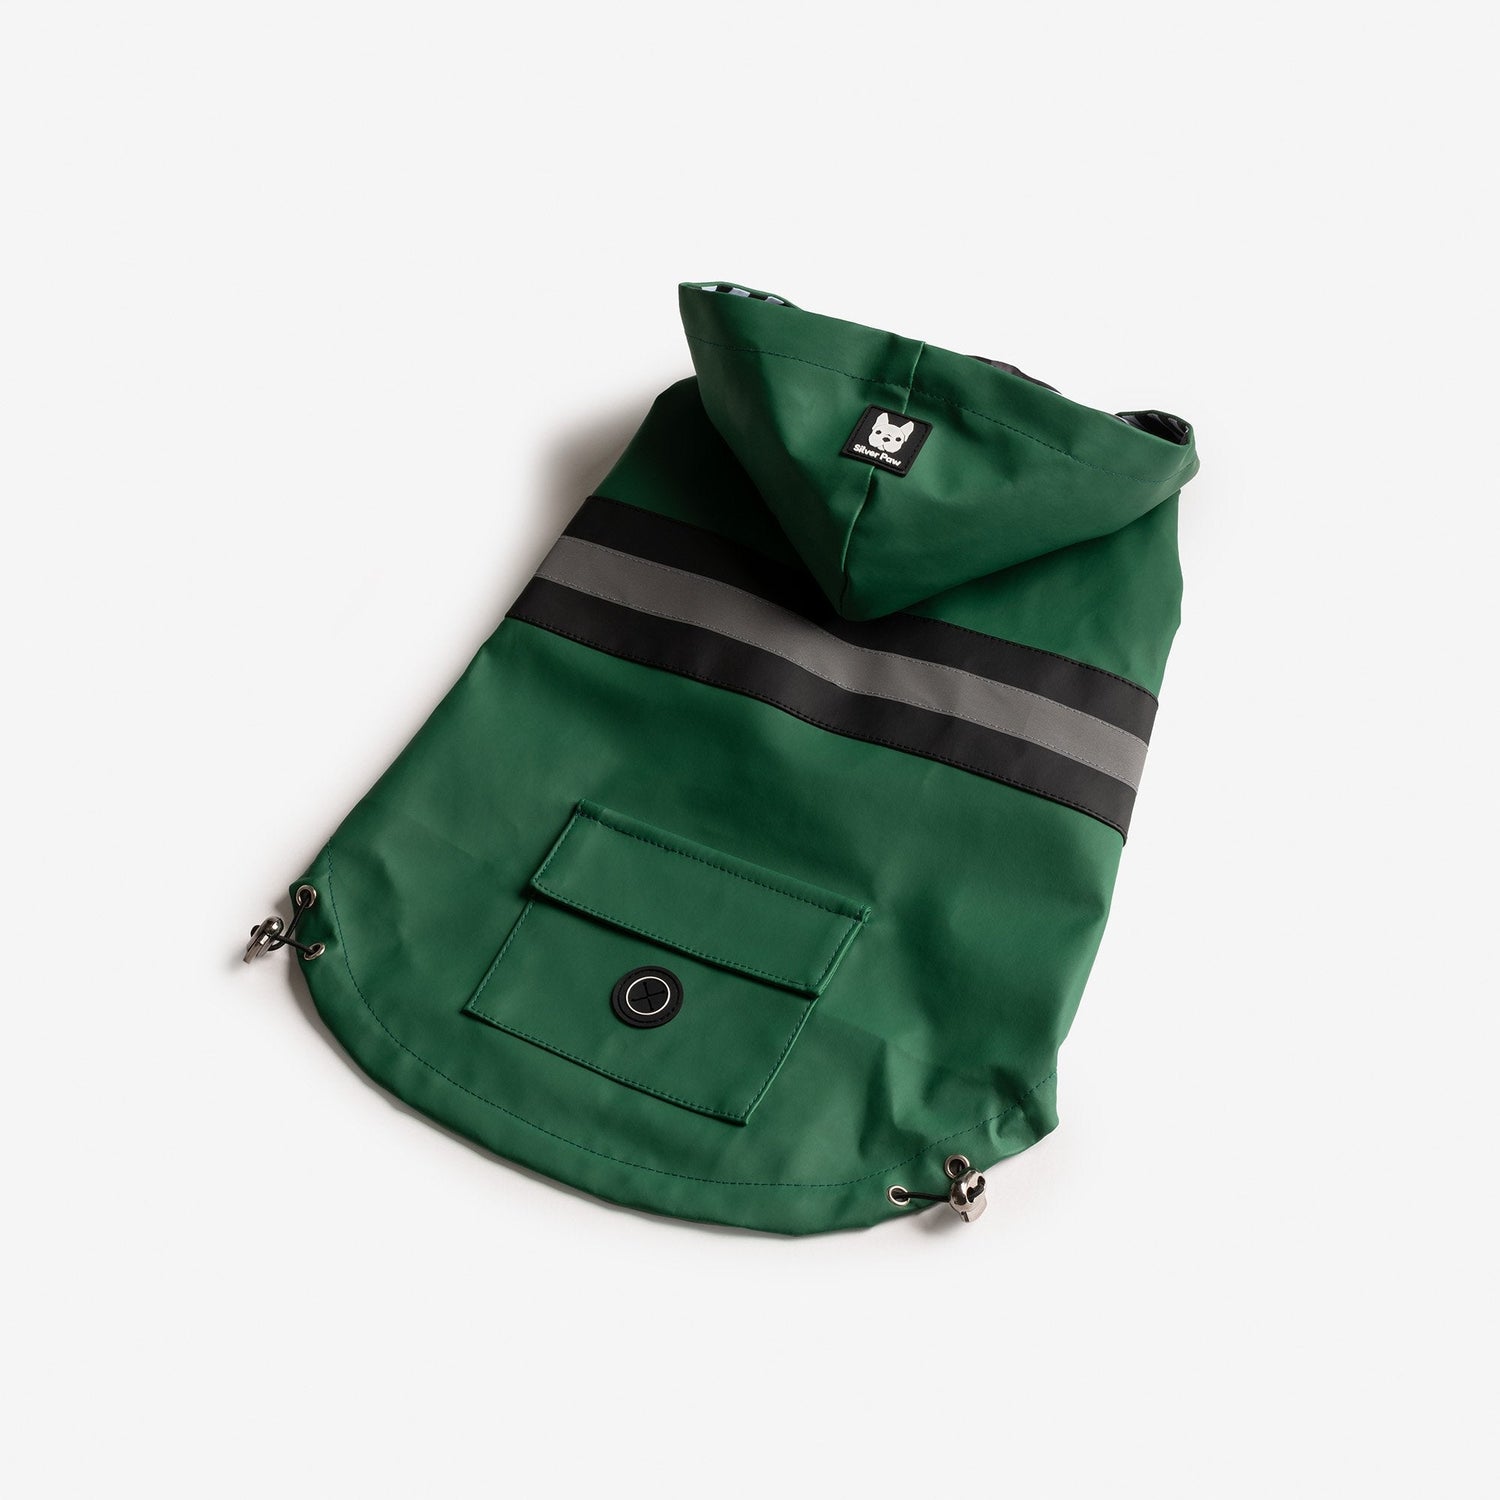 Bundle Aden Dog Raincoat - Green + Life Jacket - Silver Paw